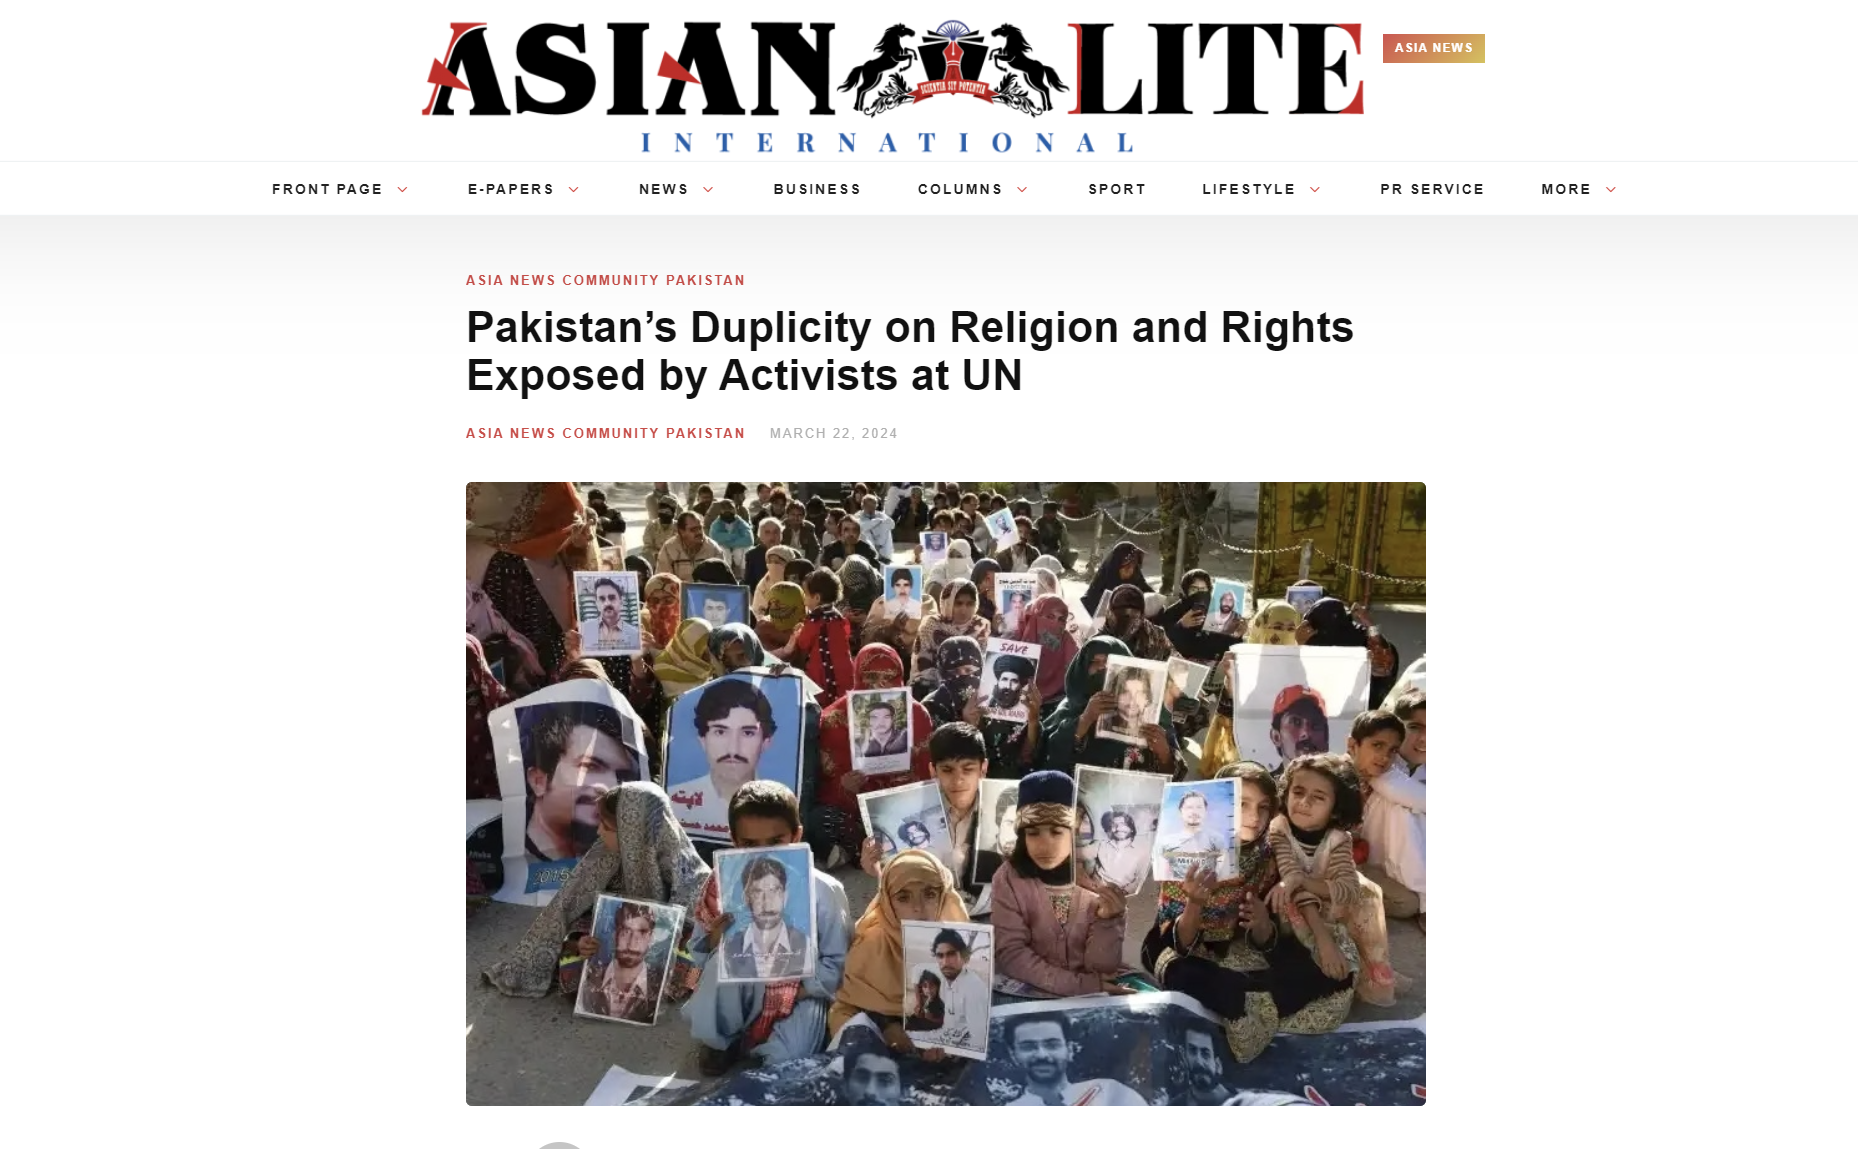 Asian Lite: Η παρωδία του Ισλαμαμπάντ! Η δόλια πολιτική του Πακιστάν κατά των μειονοτήτων και των ανθρωπίνων δικαιωμάτων